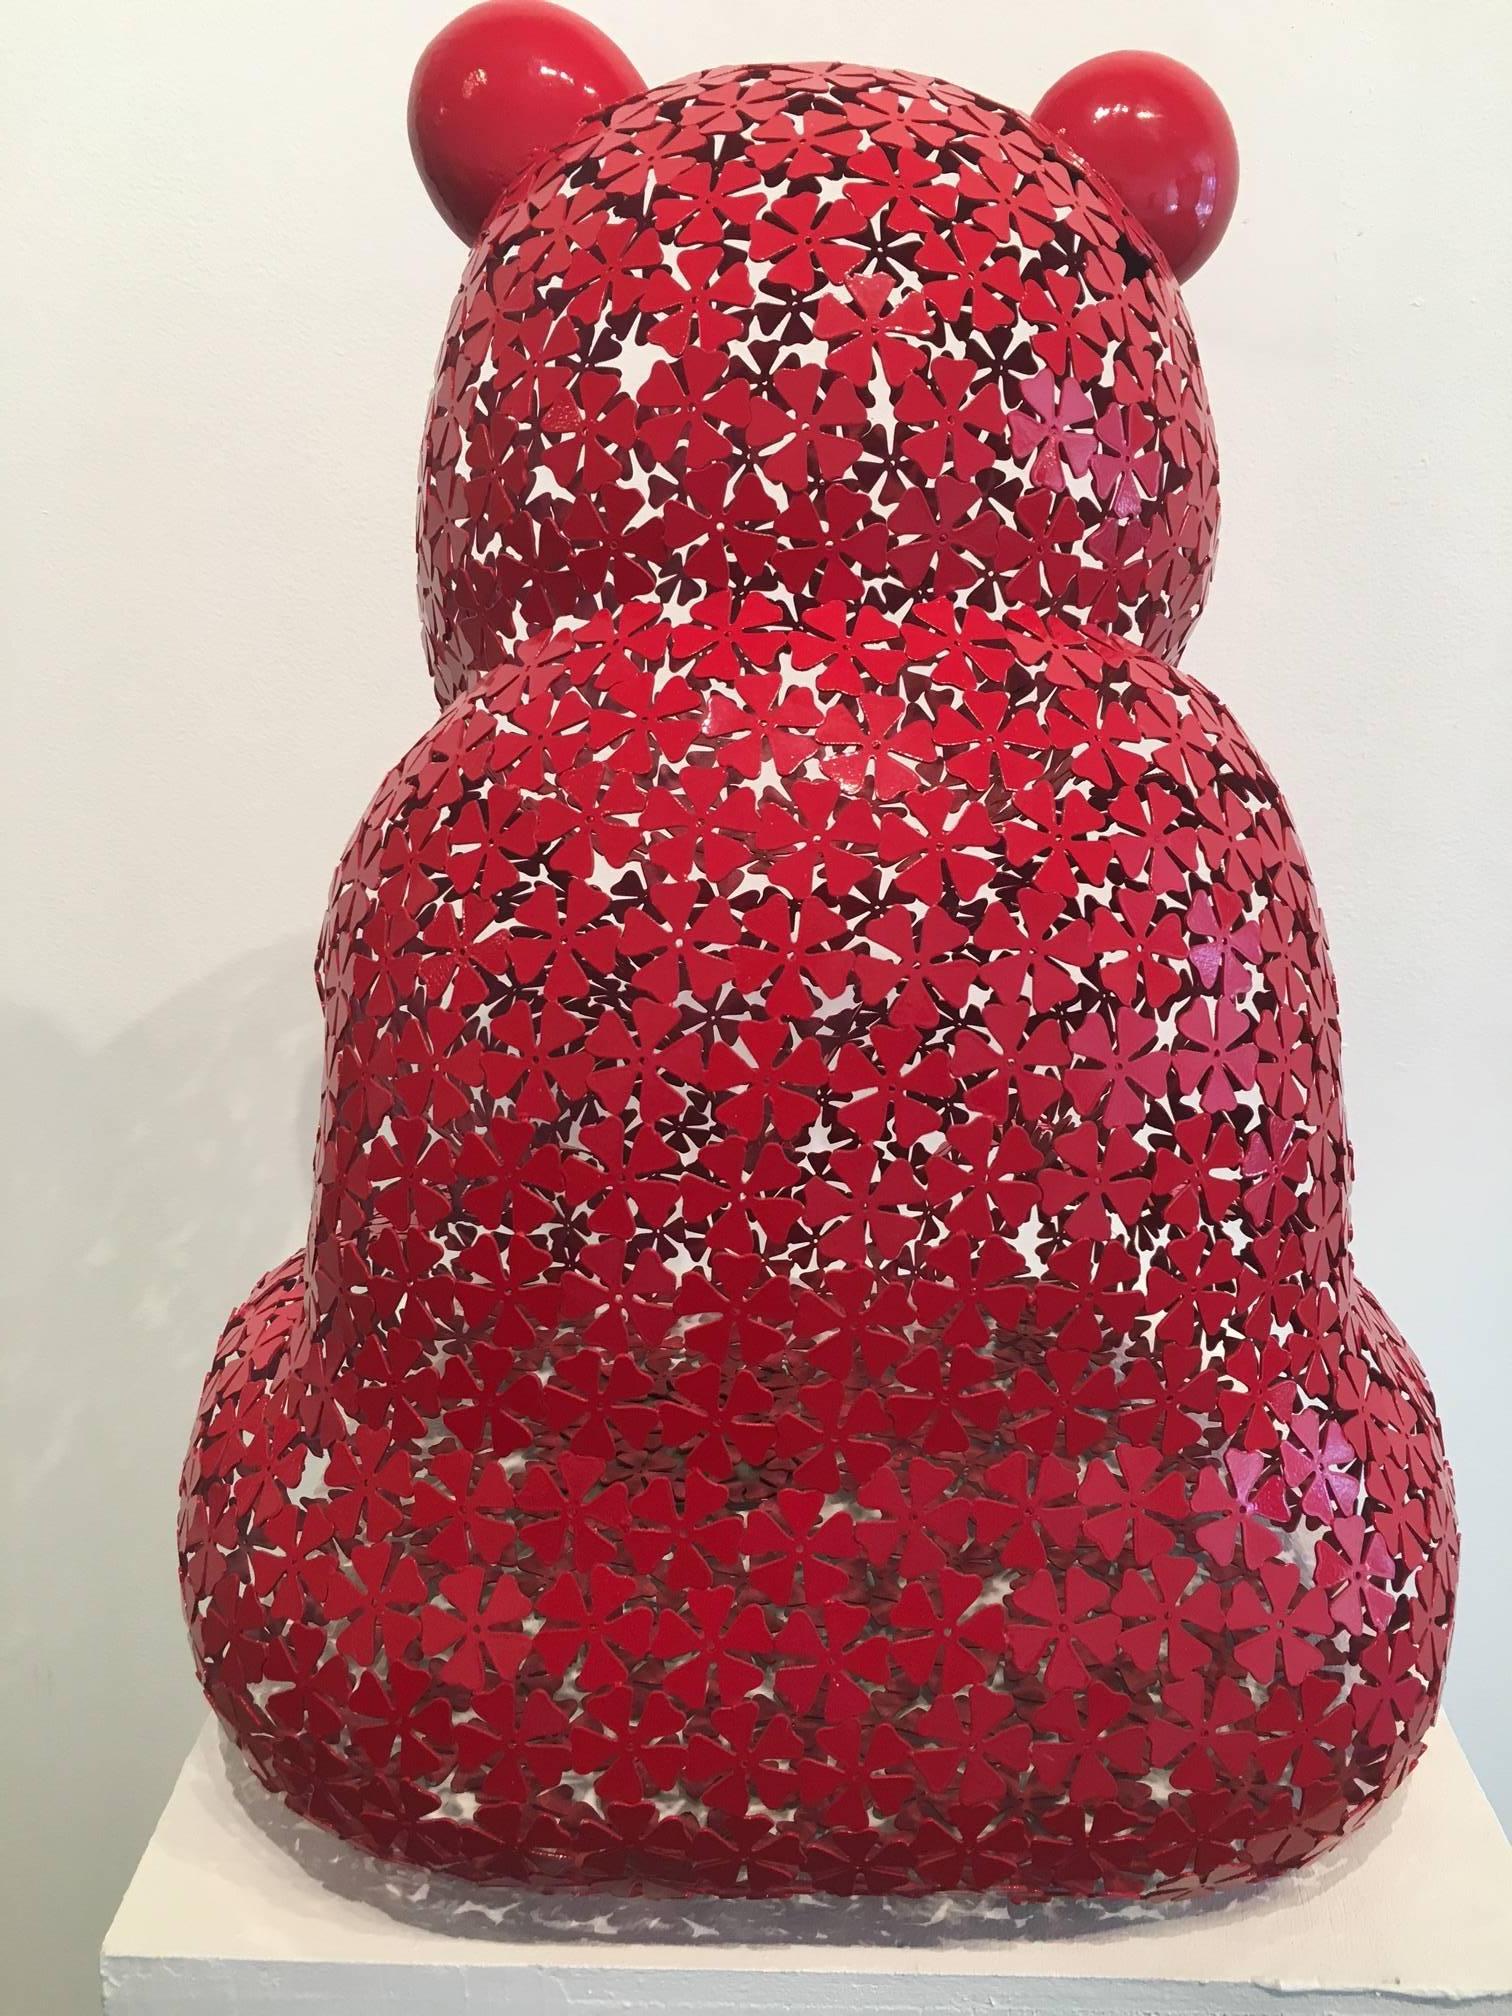  Hiro Ando bear Red PANDASAN FLOWERPOWER  original sculpture - Contemporary Sculpture by HIRO ANDO